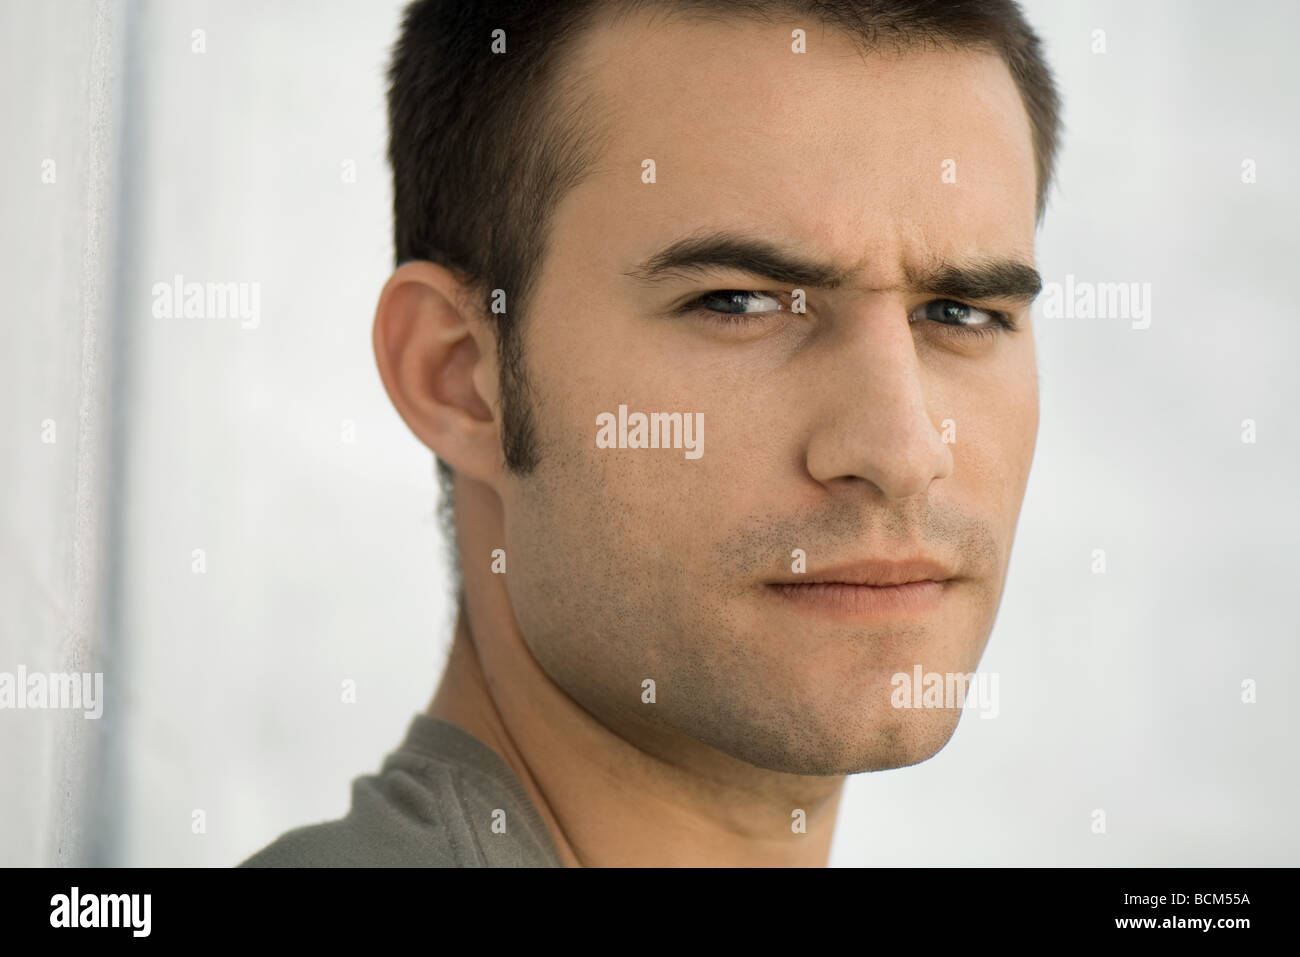 Man frowning at camera, raising one eyebrow Stock Photo - Alamy